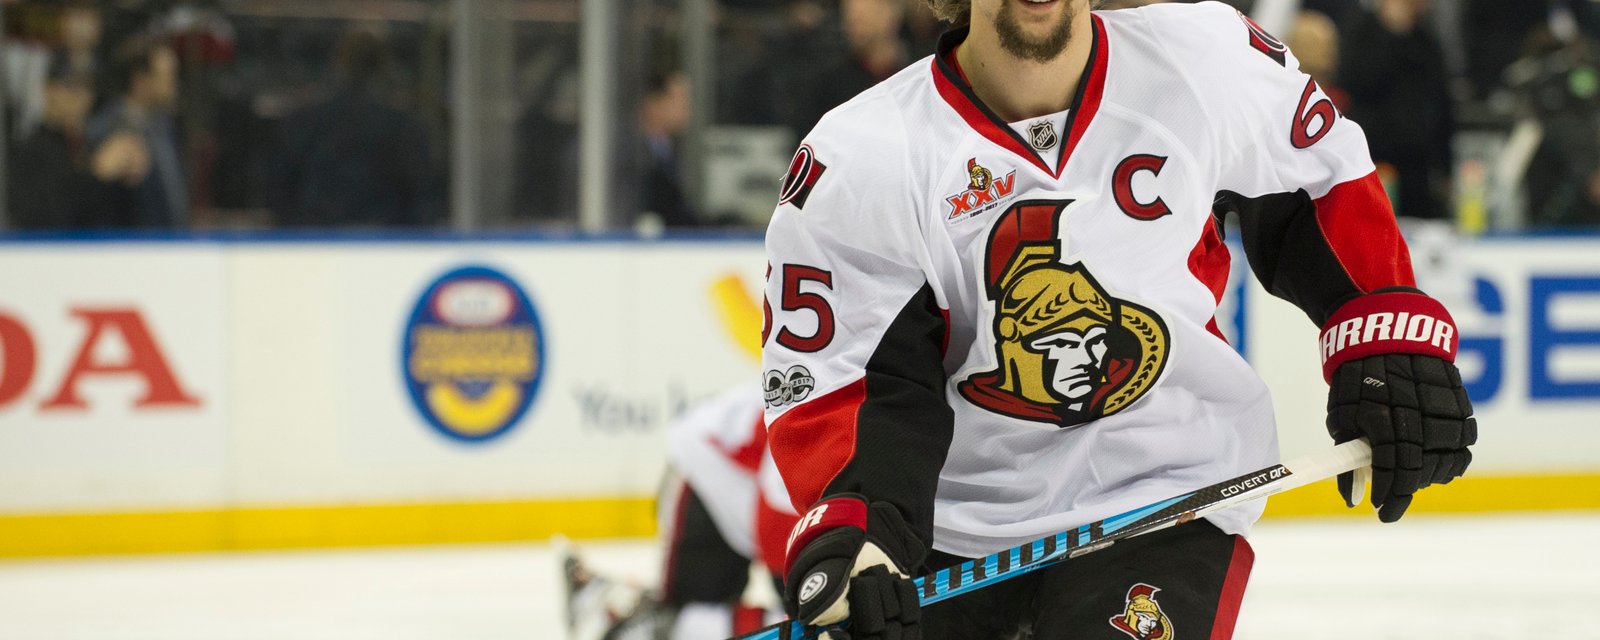 Breaking: Major update on Karlsson's injury status!